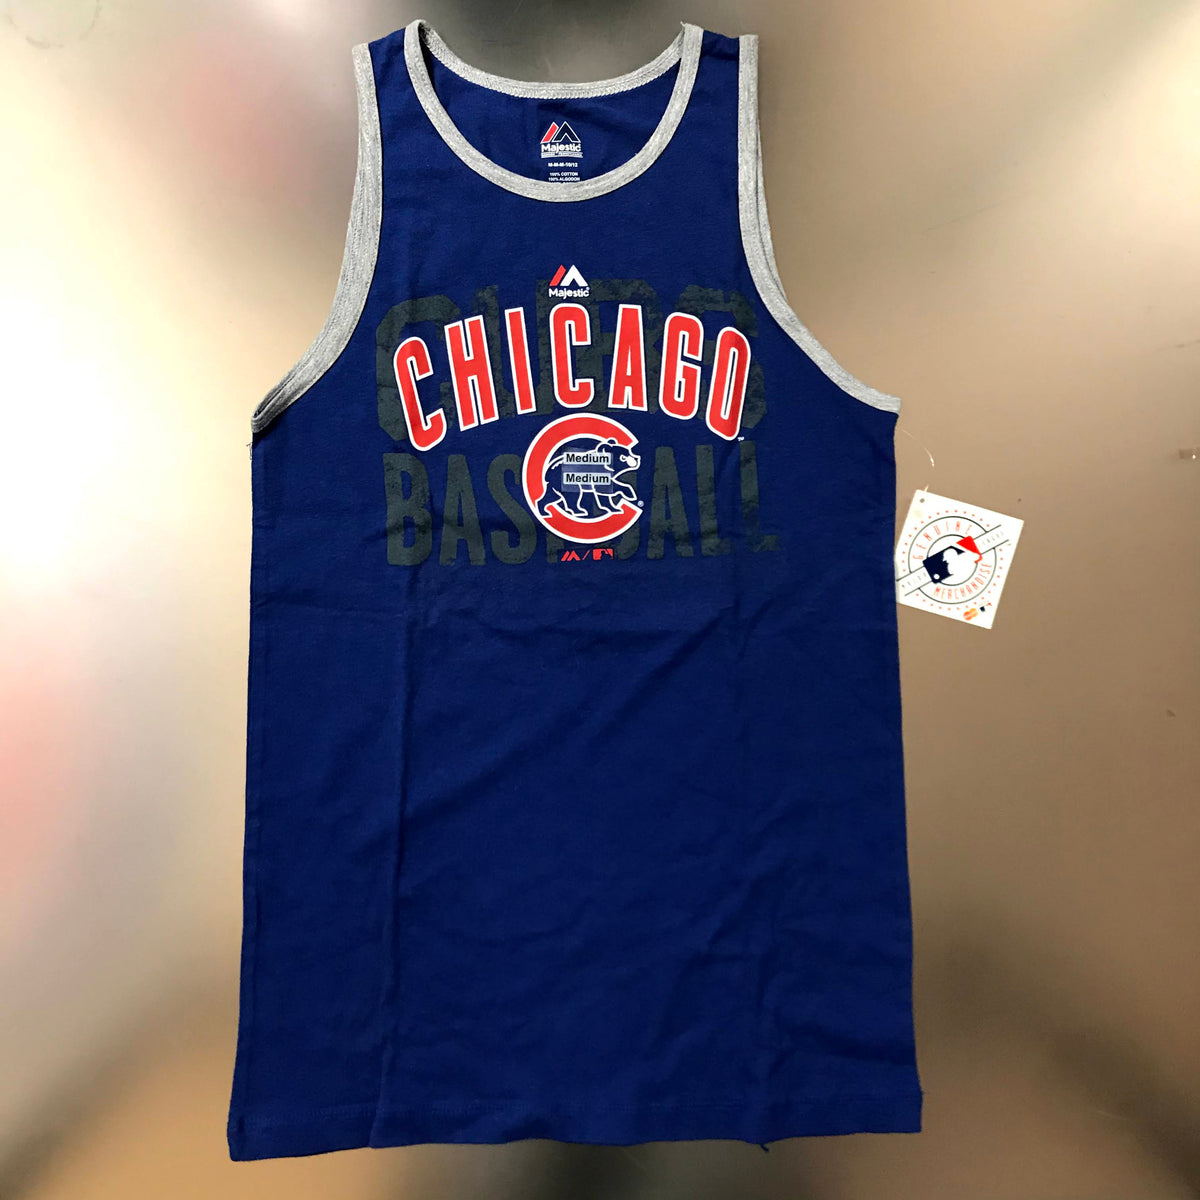 Chicago Cubs Baseball Flag Tee Shirt Youth Medium (8-10) / Royal Blue